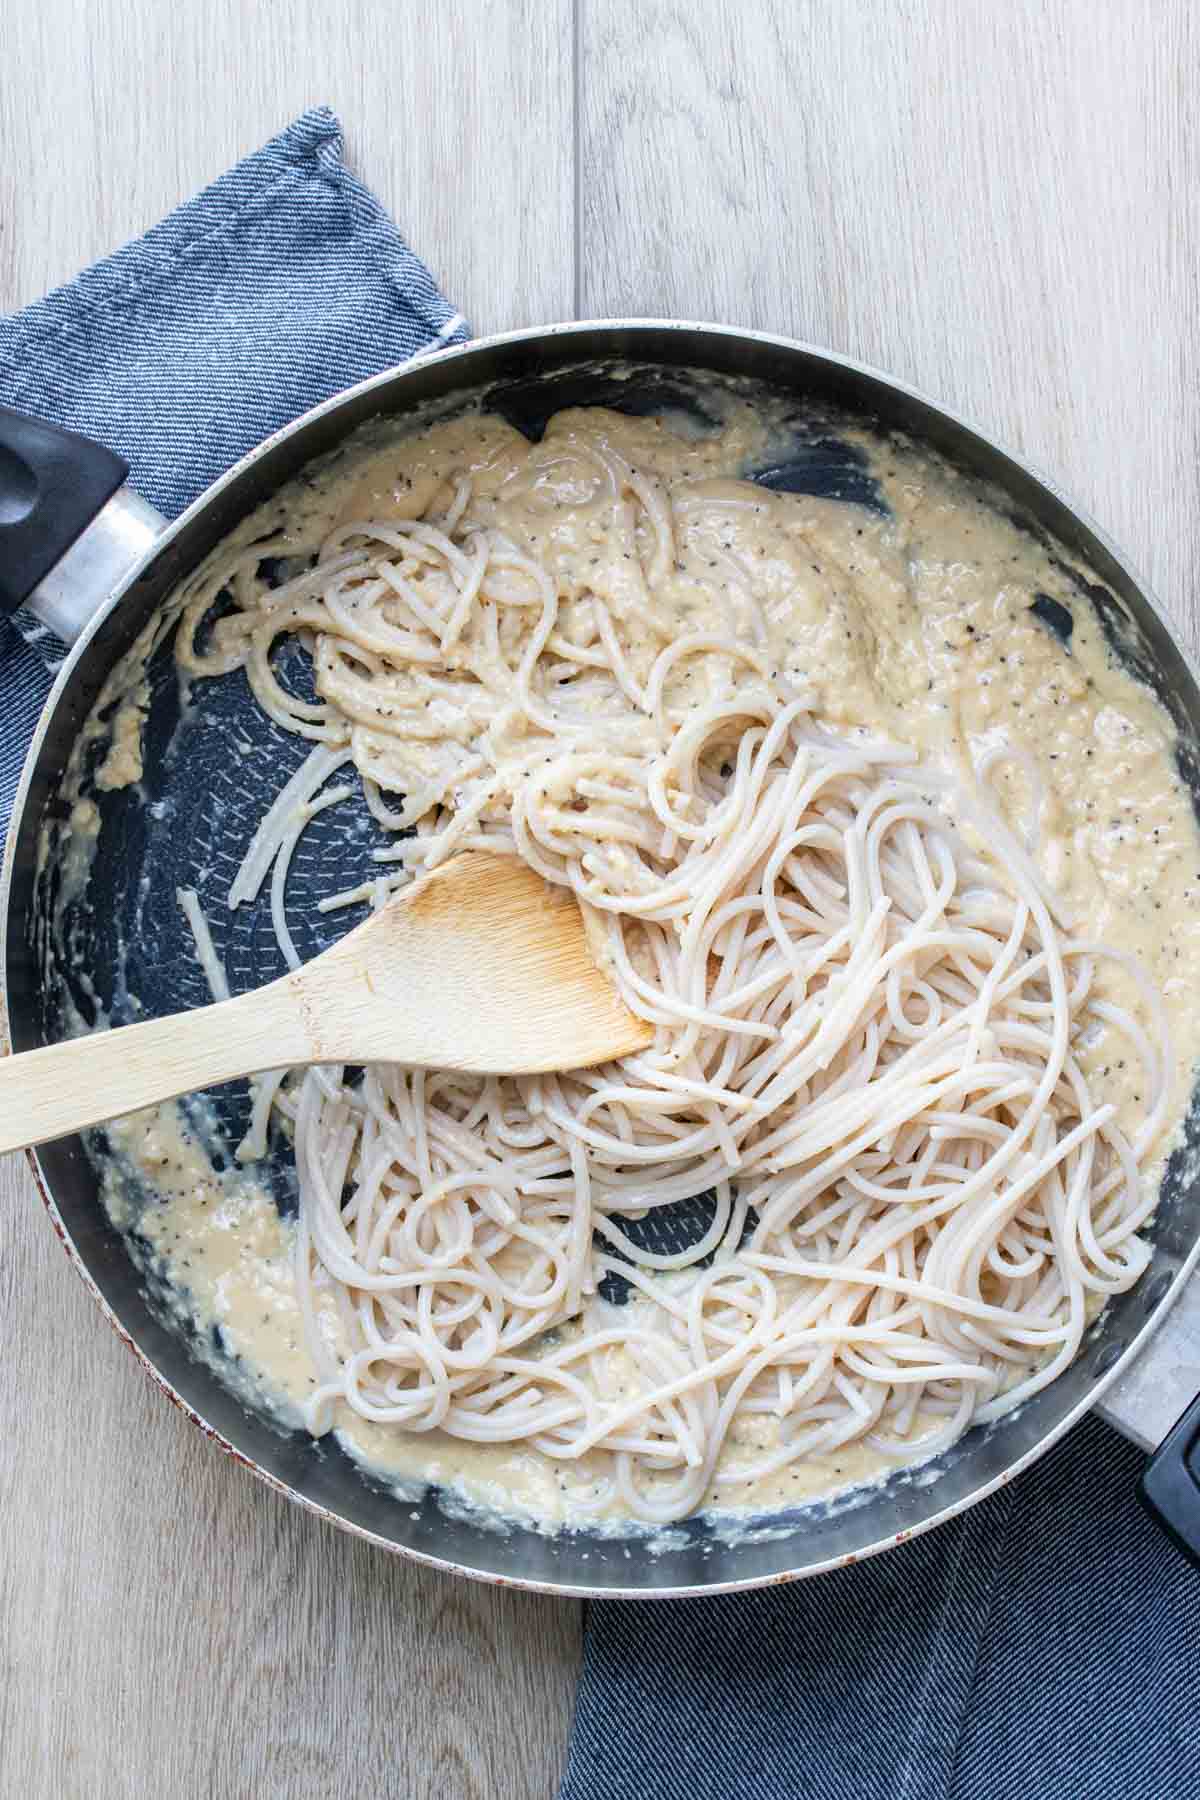 Wooden spoon mixing spaghetti into a creamy sauce in a saute pan